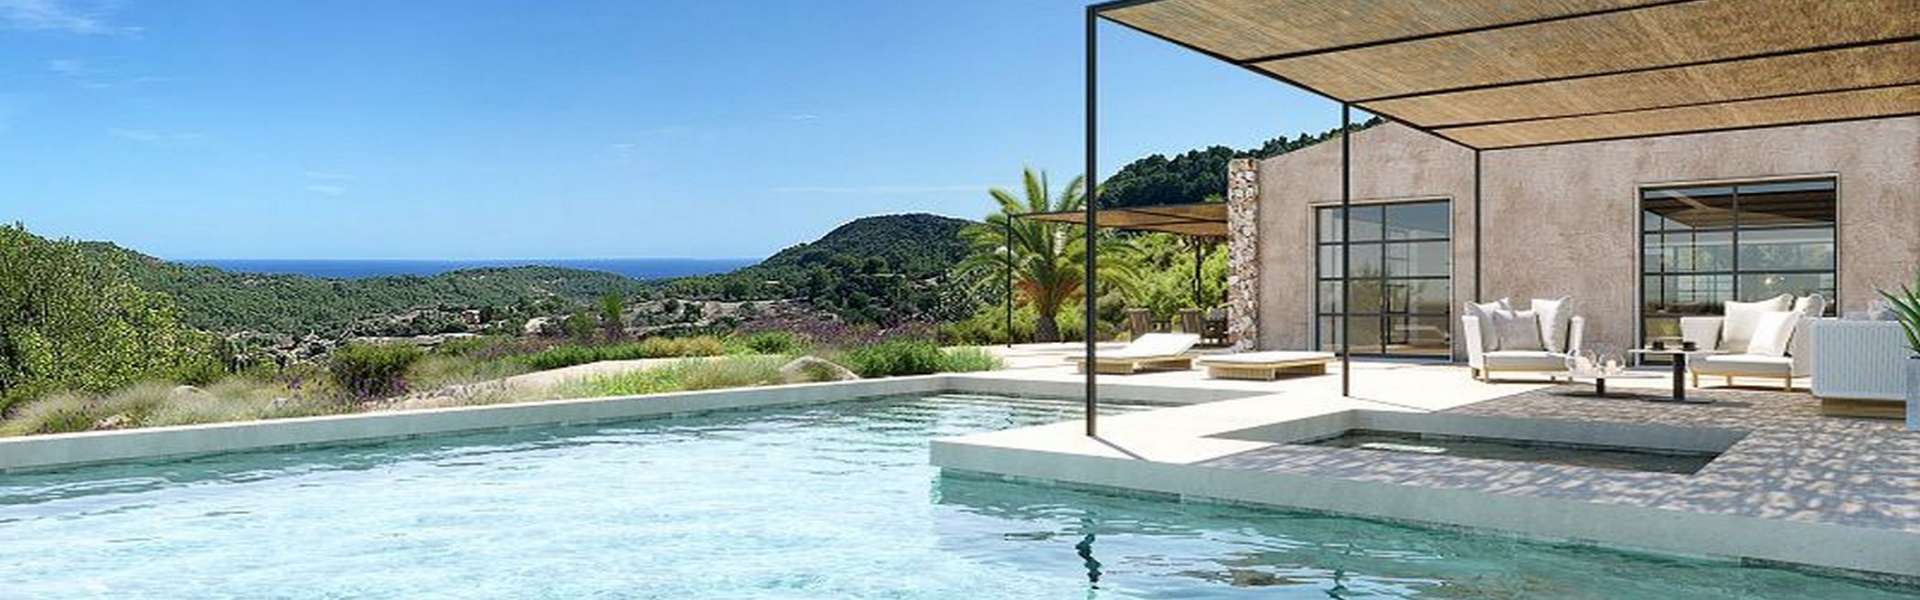 Son Macià - Spectacular designer villa with sea views